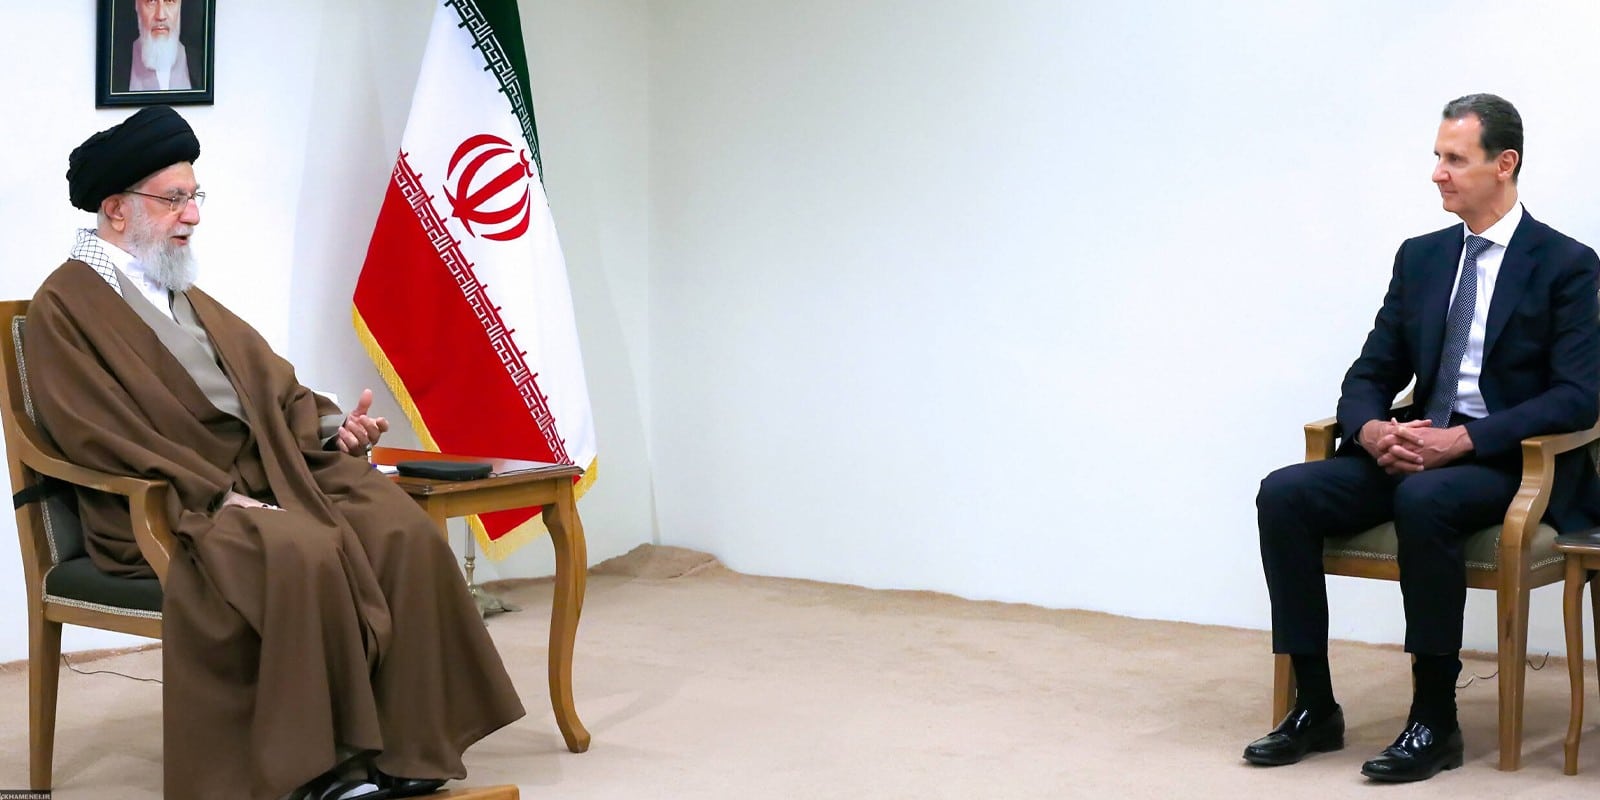 Iran's Supreme Leader Ayatollah ALI KHAMENEI on May 08, 2022 during a meeting with Syrian President BASHAR AL-ASSAD